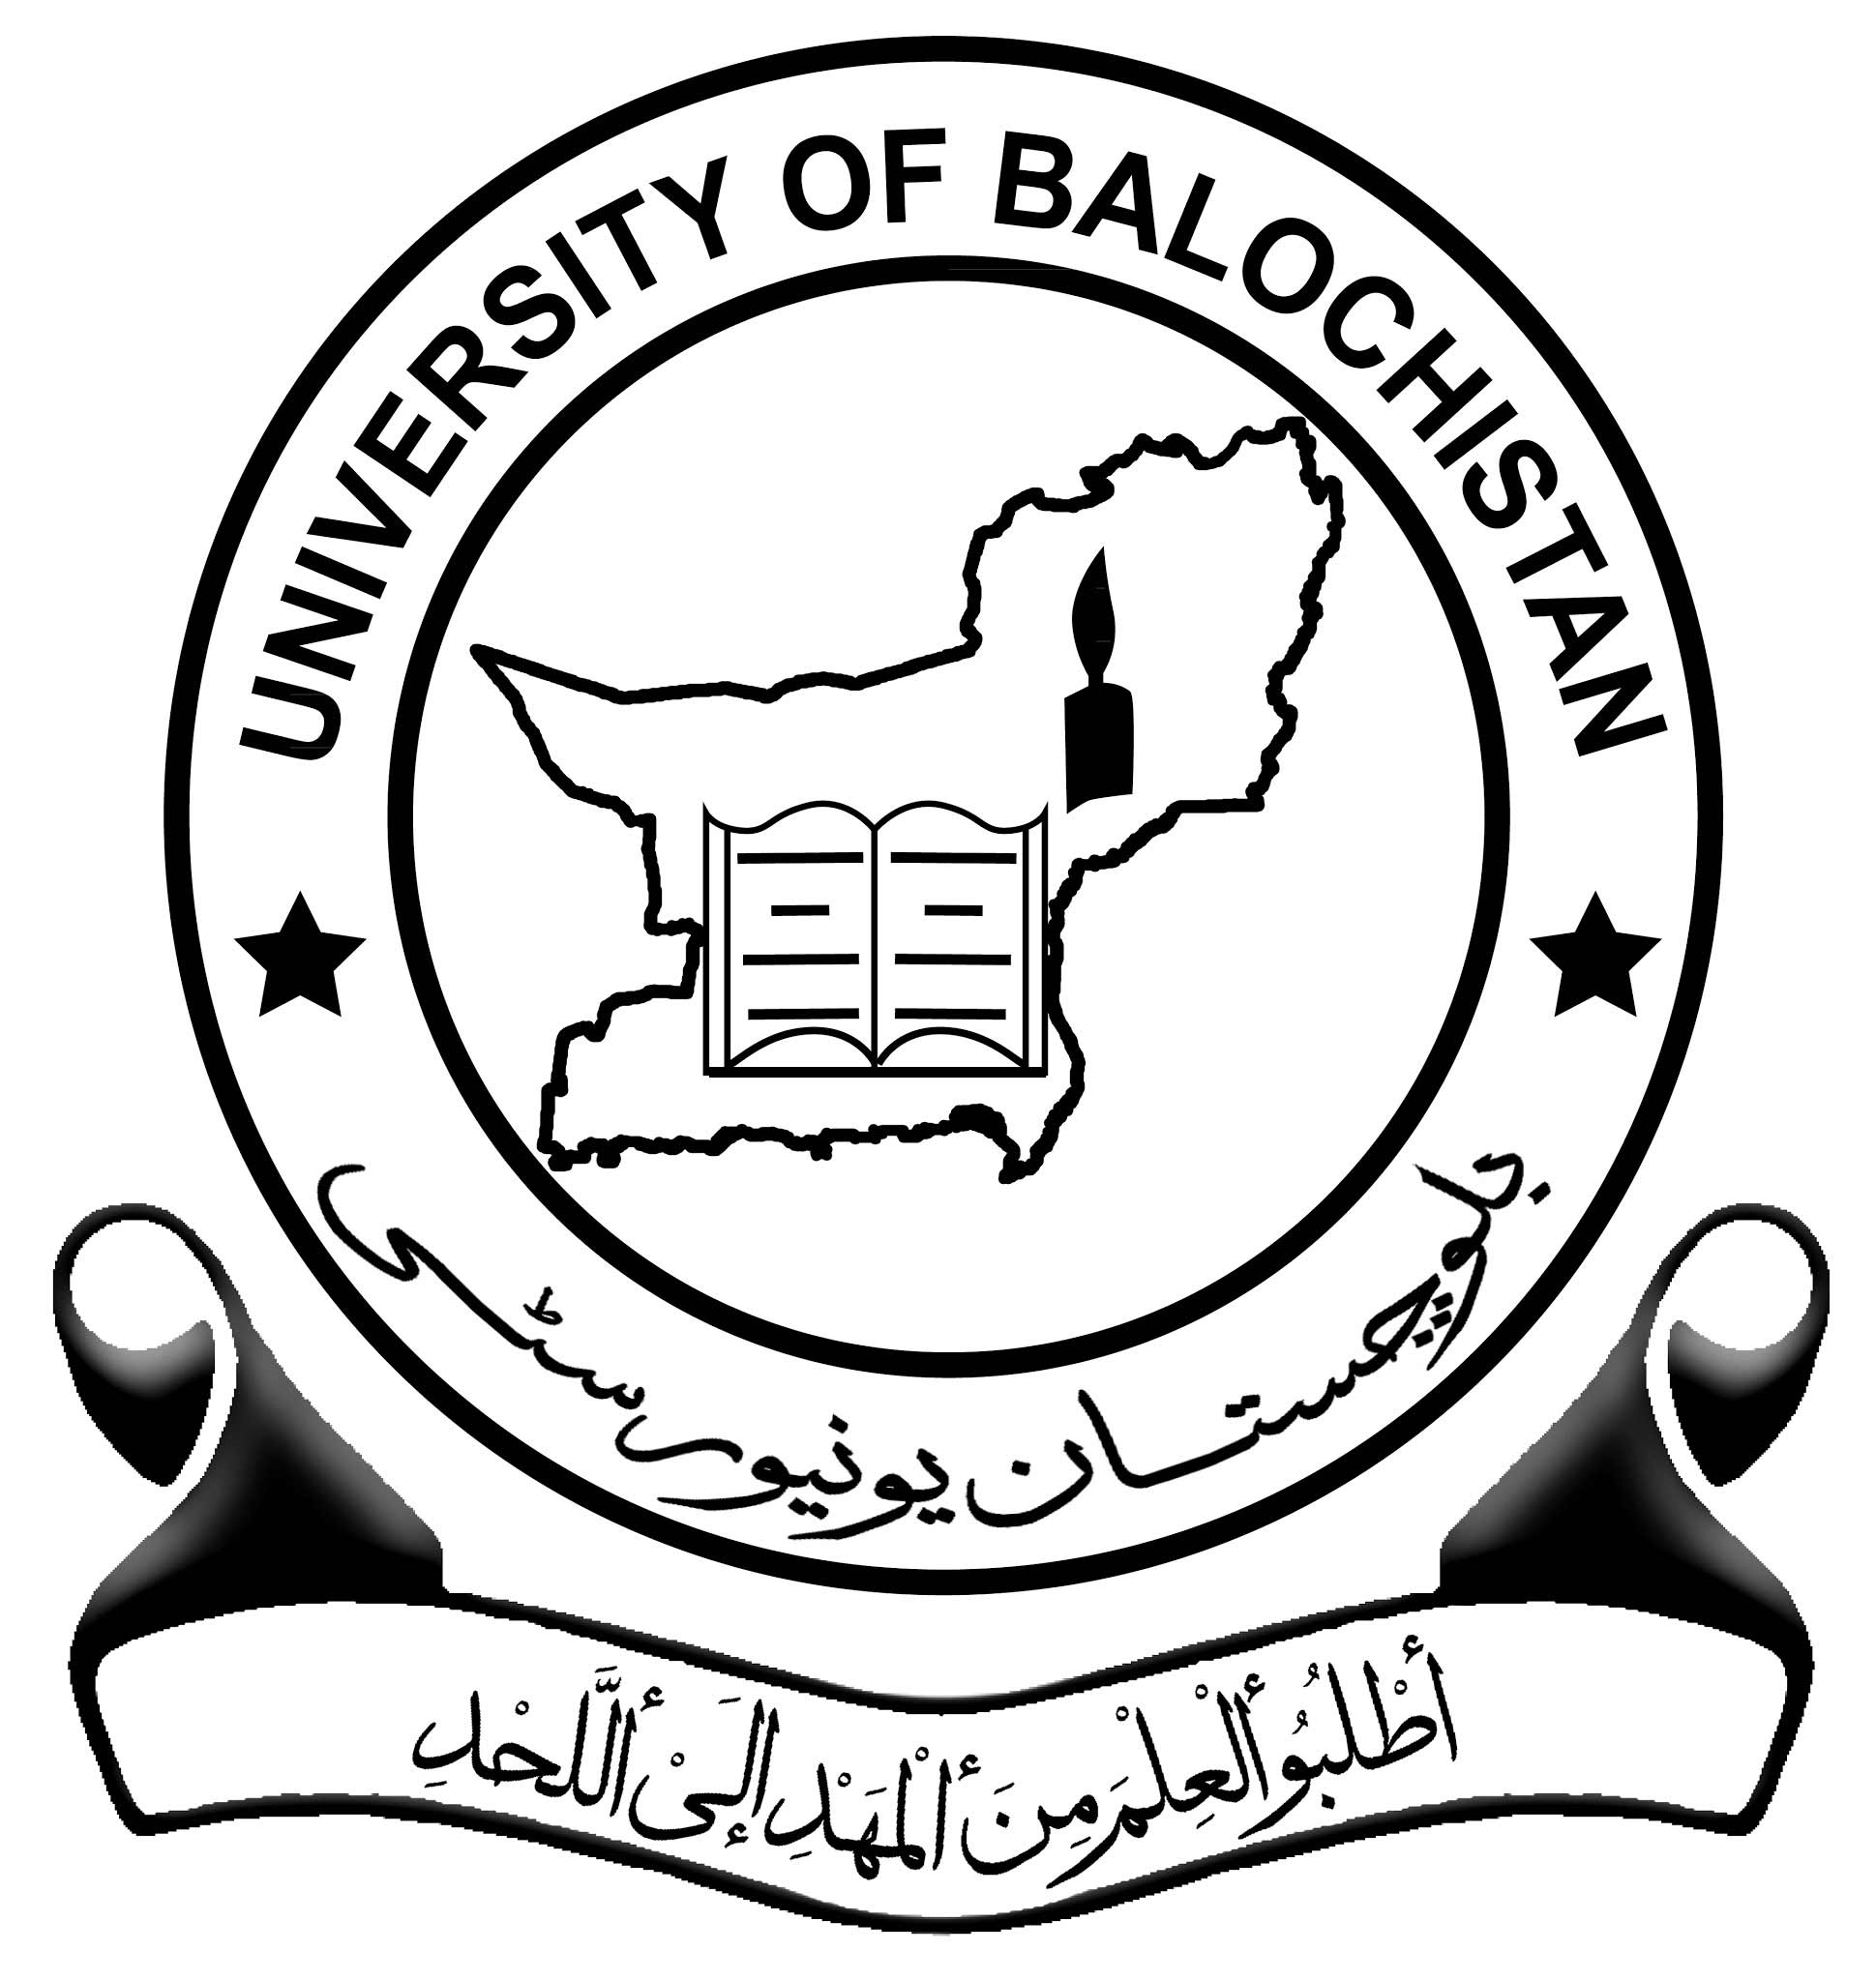 University of Balochistan